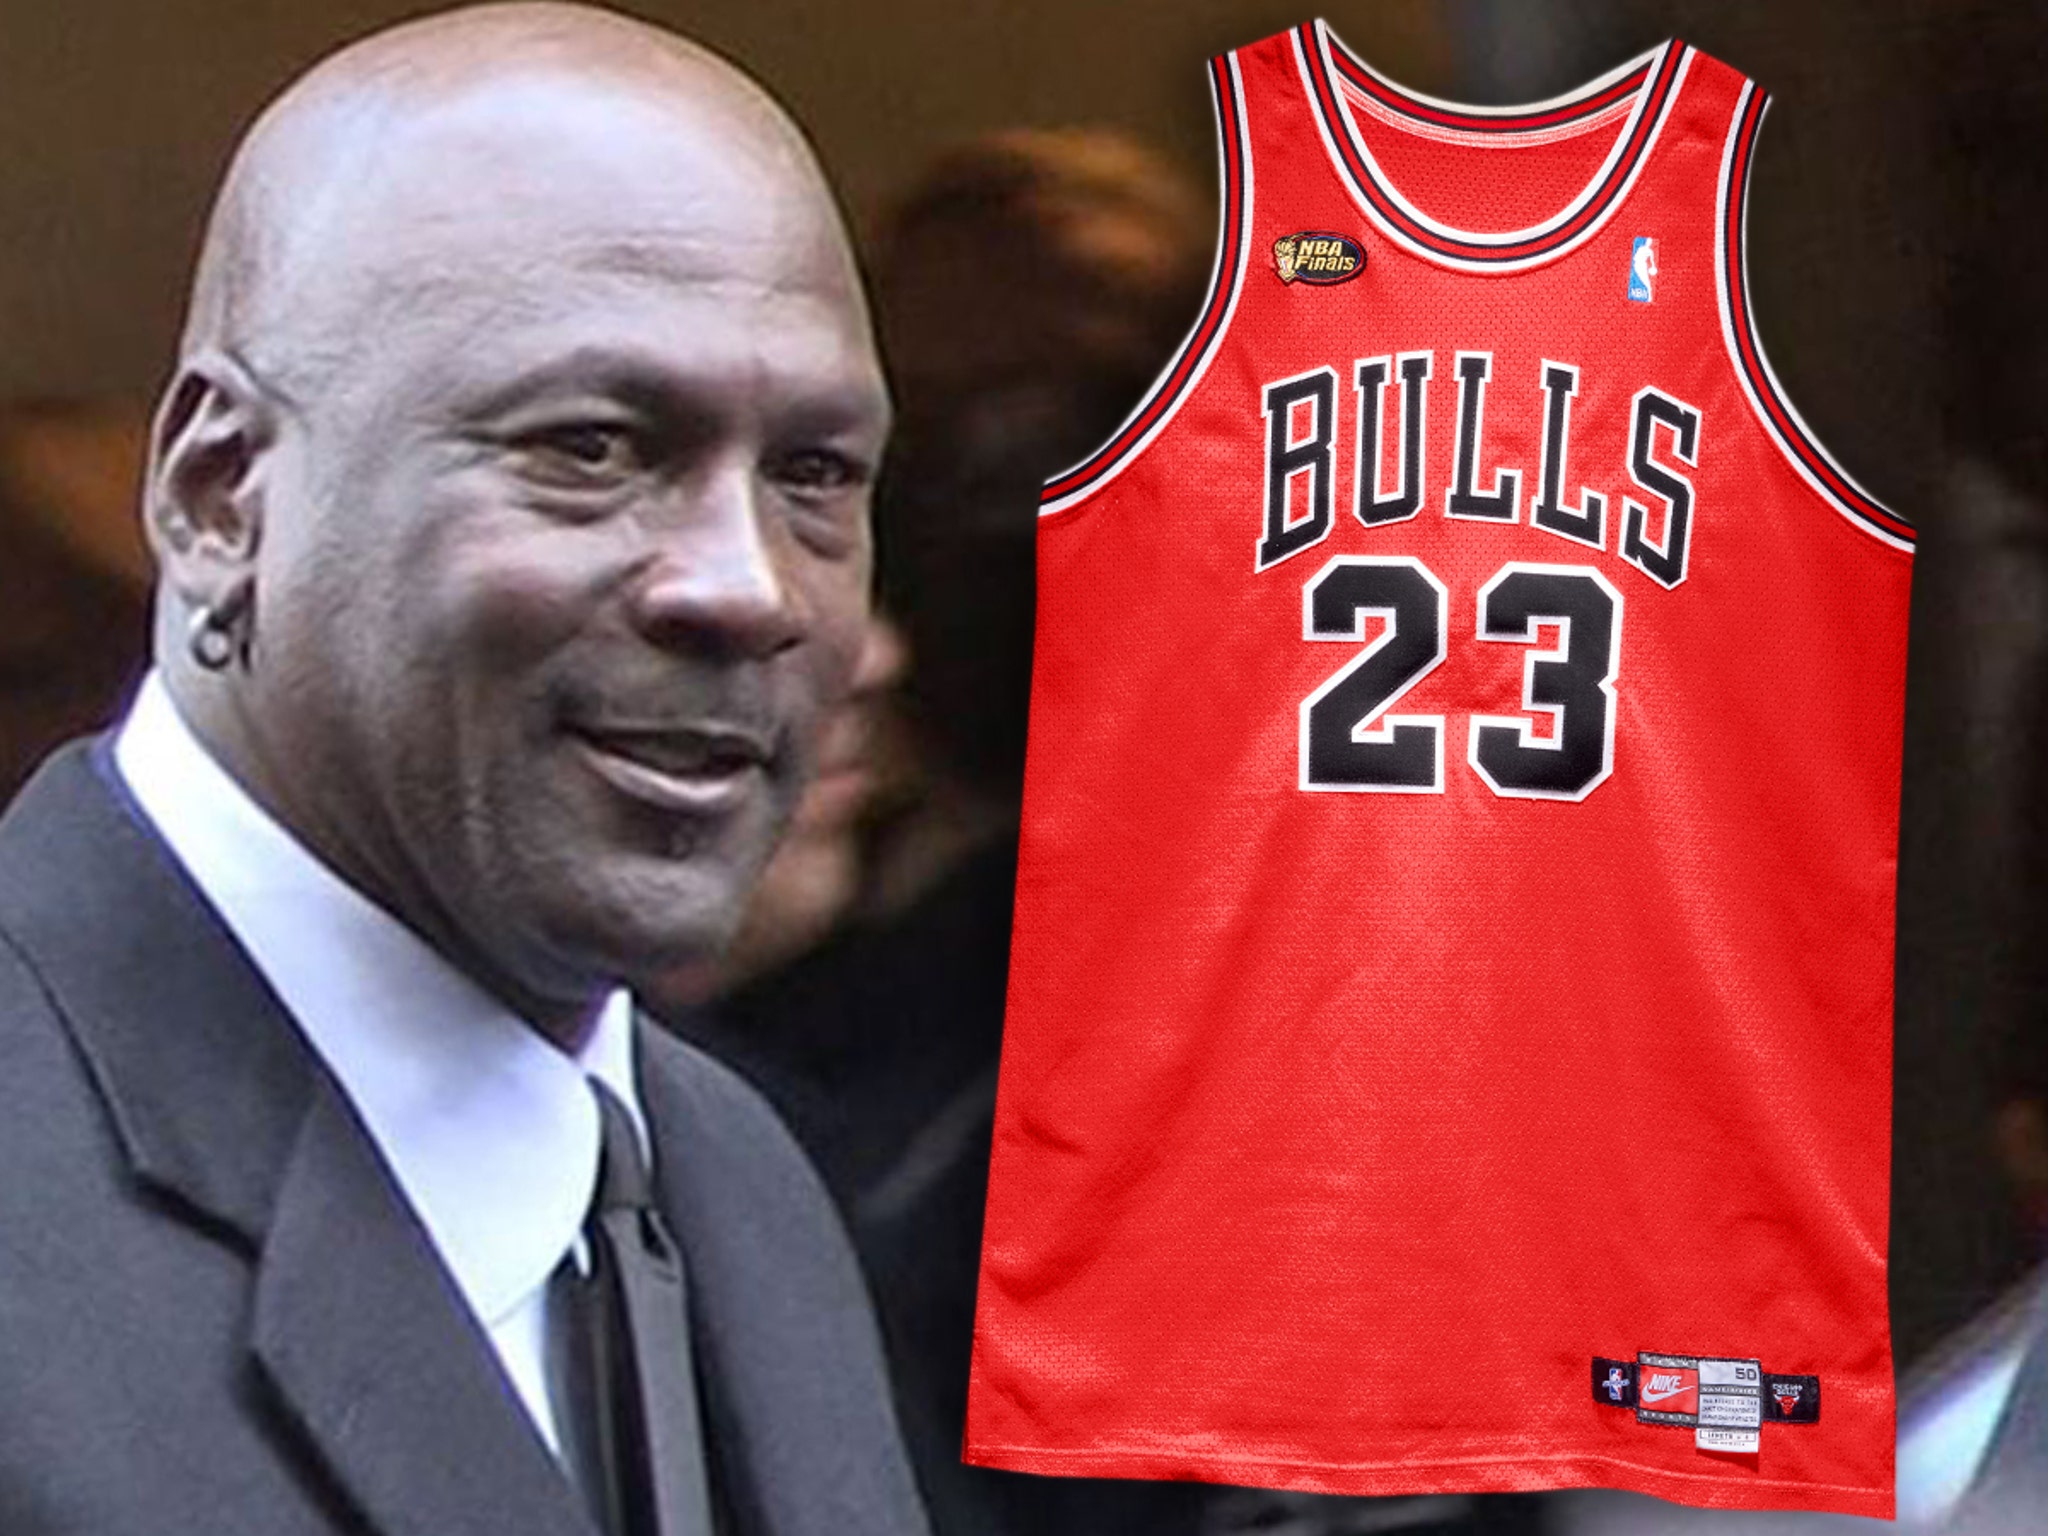 Download Image Michael Jordan in Iconic Chicago Bulls Jersey Wallpaper